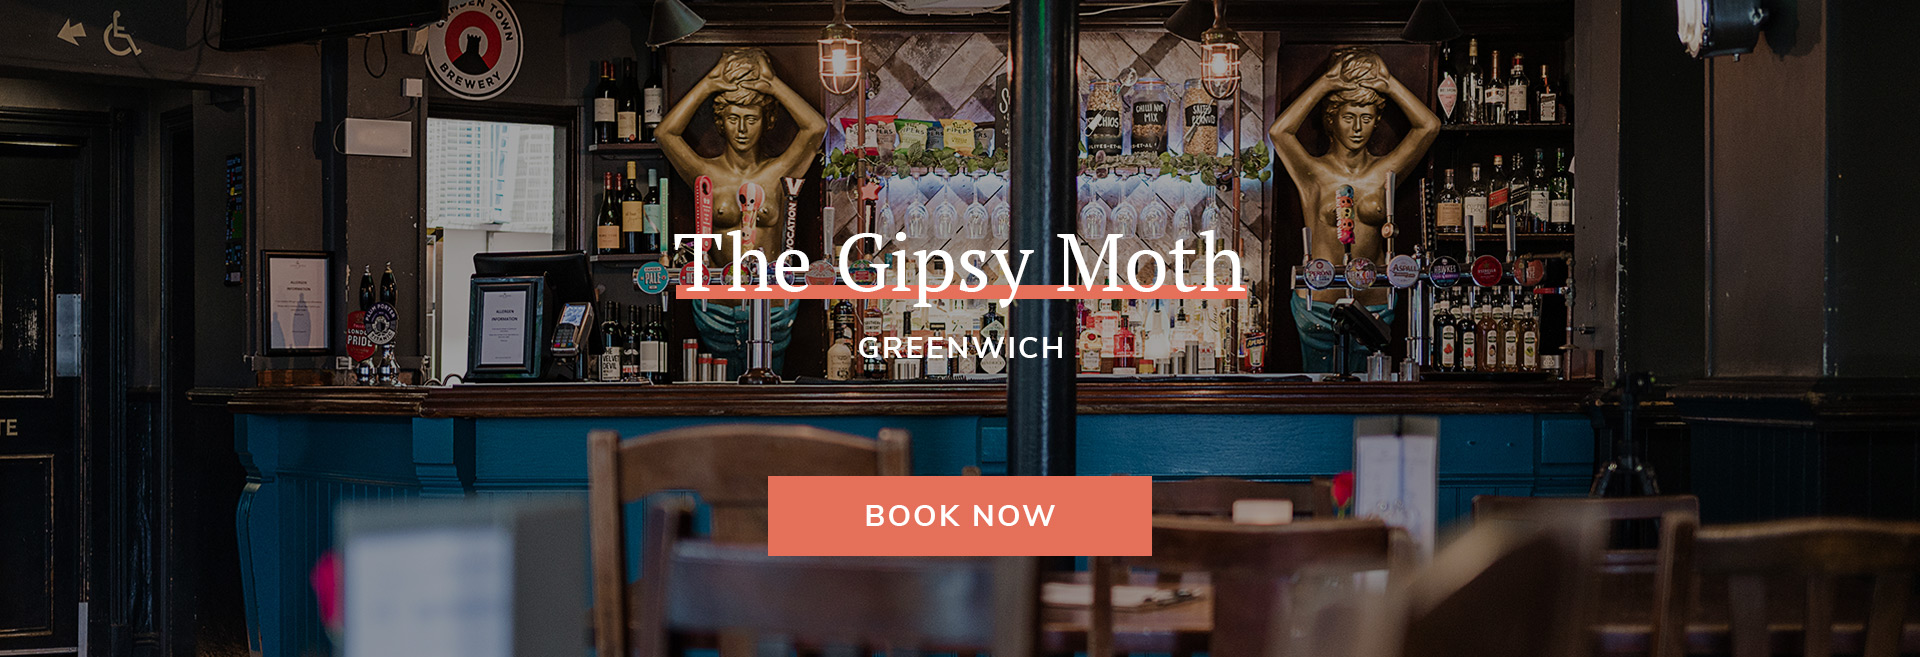 The Gipsy Moth Banner 2